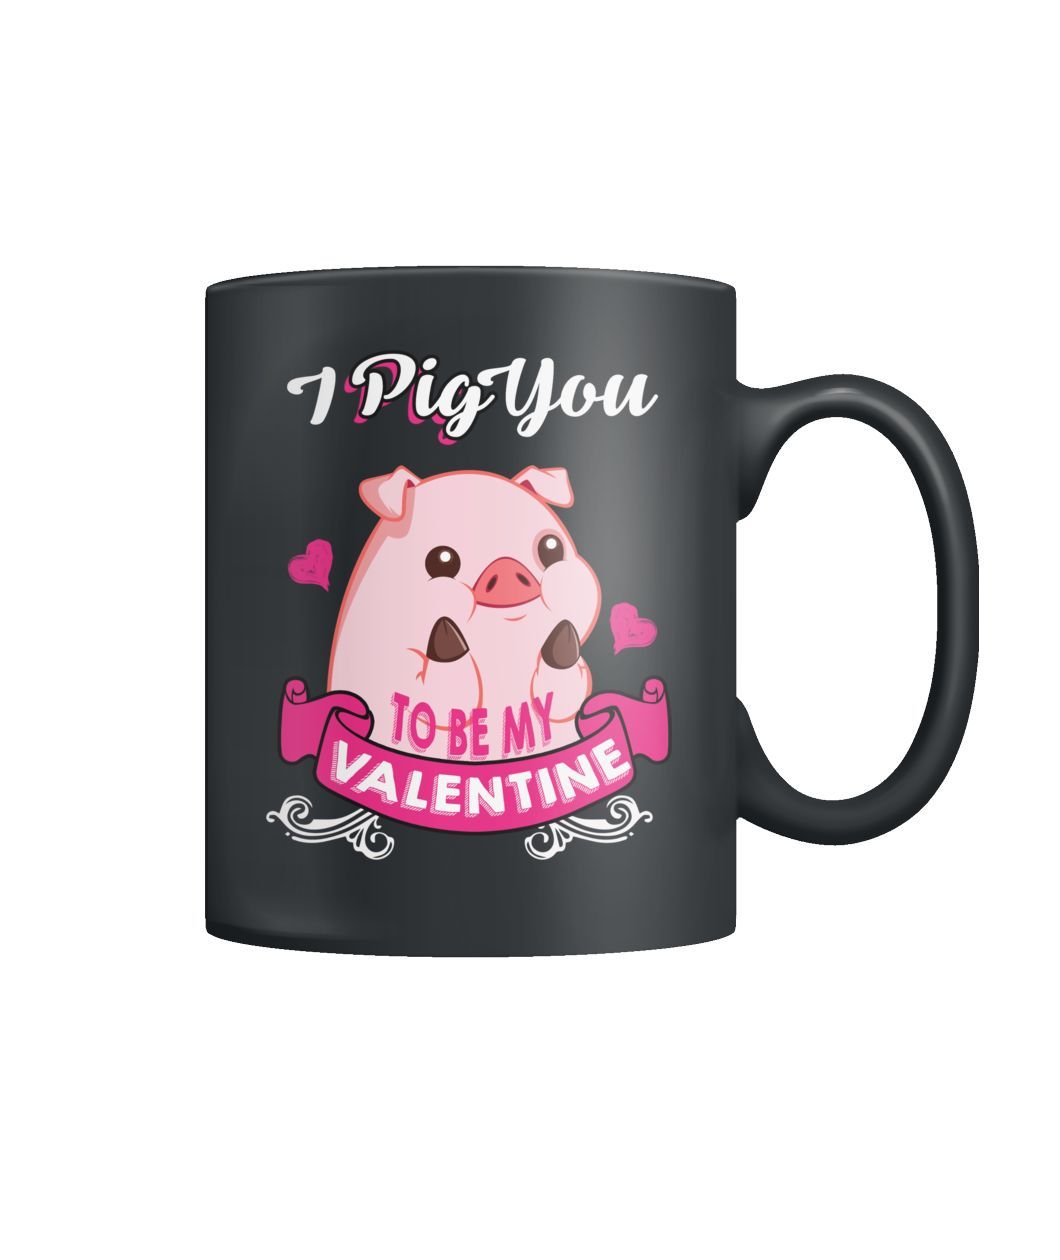 Pig You Mug Valentine Gifts Color Coffee Mug